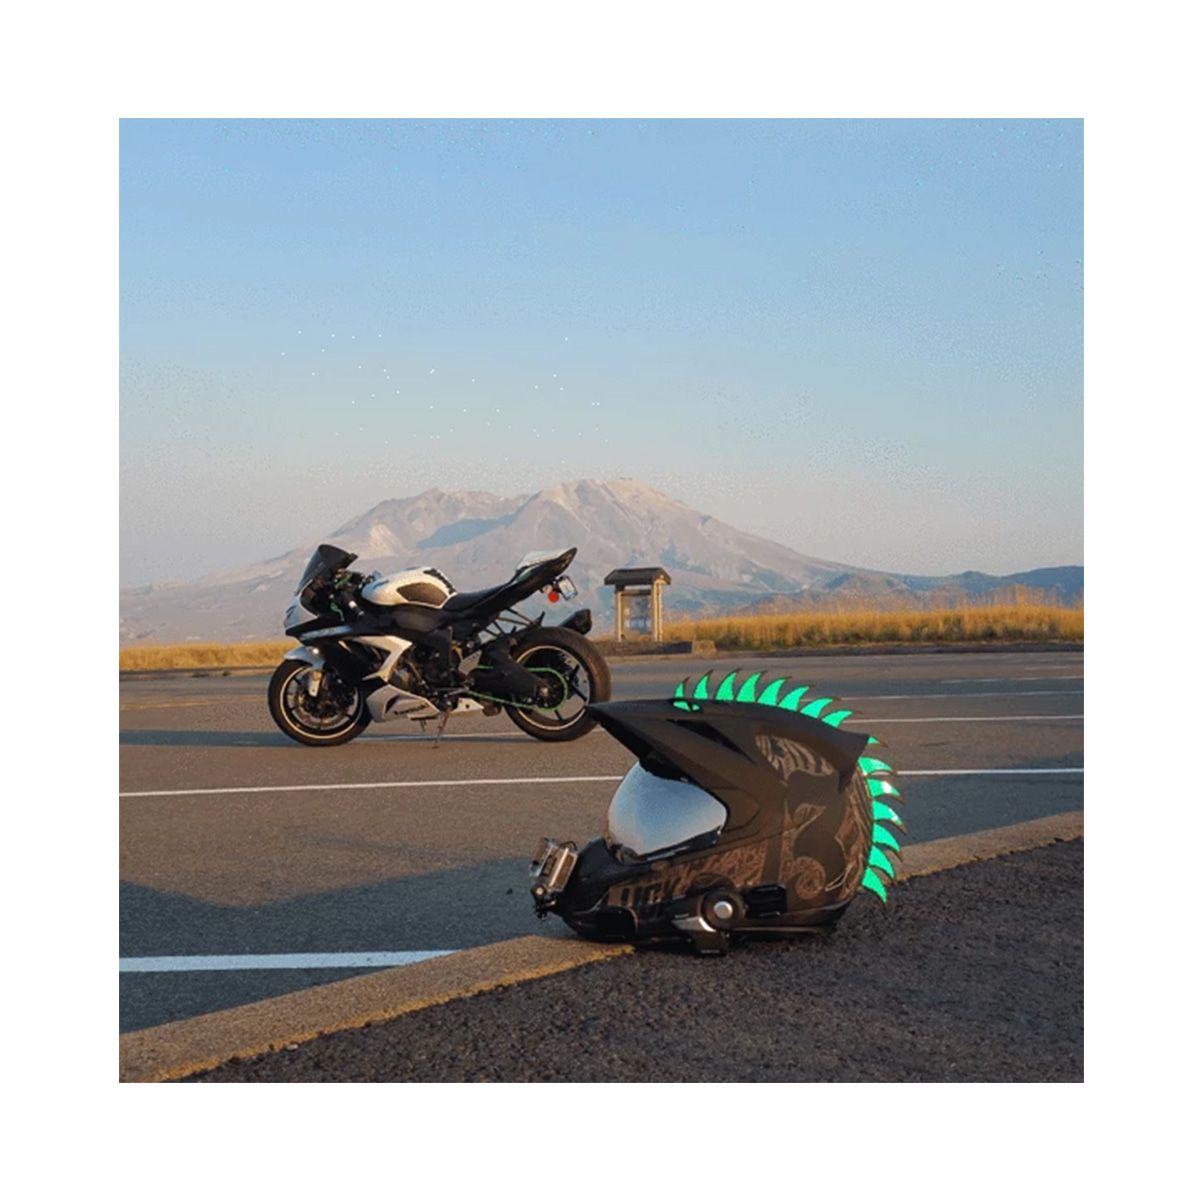 New-Reflective-Decals-Sticker-for-Rubber-Helmet-Mohawk-Warhawk-Spikes-Dirtbike-Motorcycle-1574781